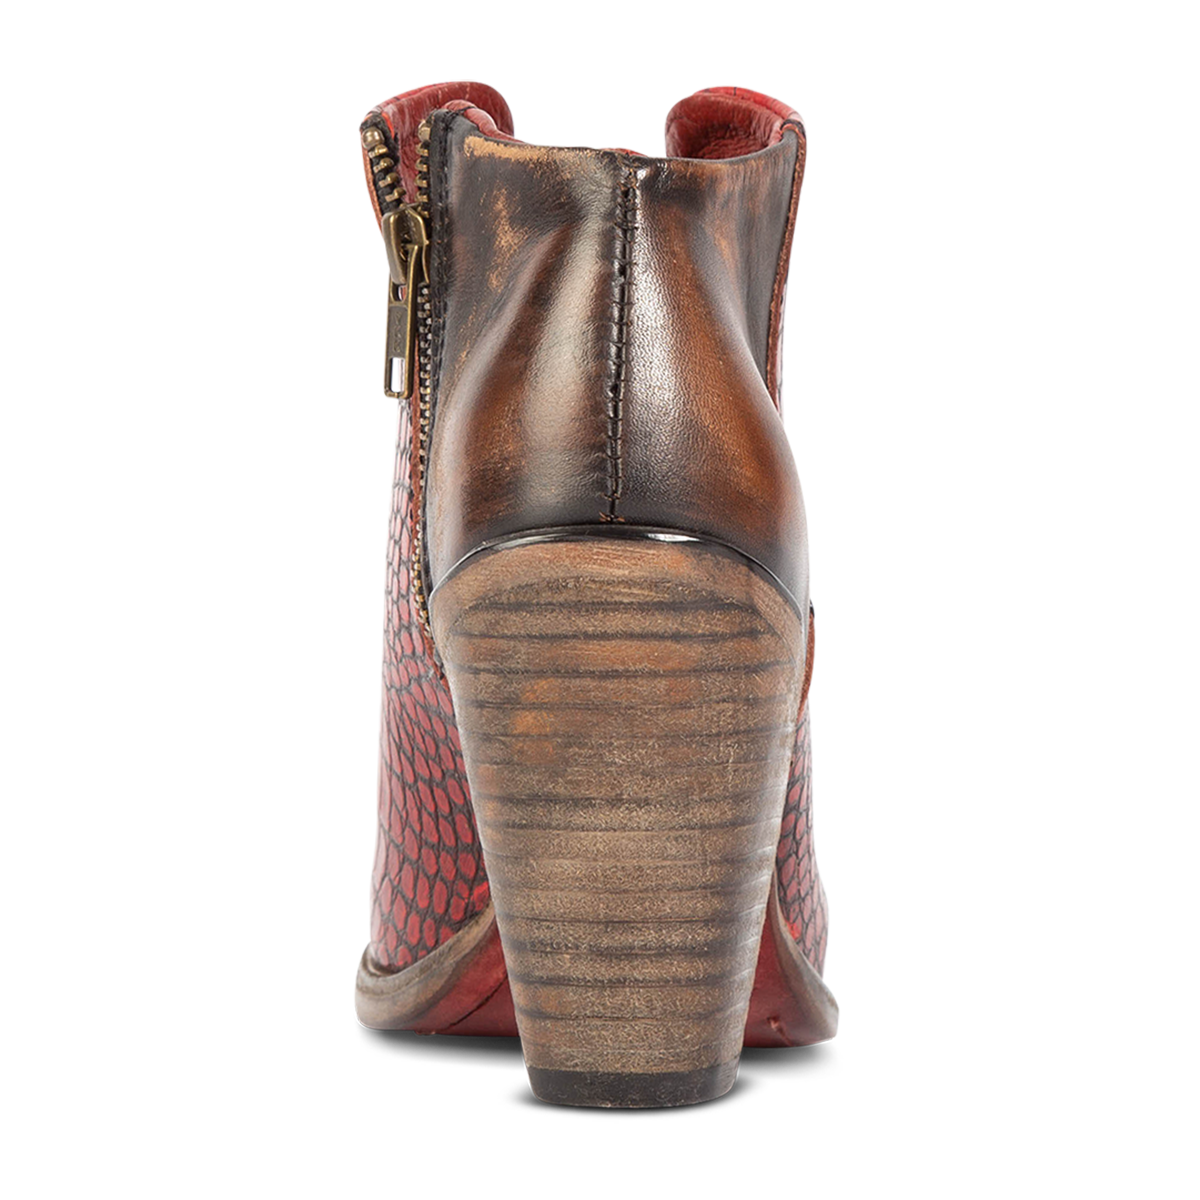 Back view showing inverted wooden heel on FREEBIRD women's Detroit red croco bootie